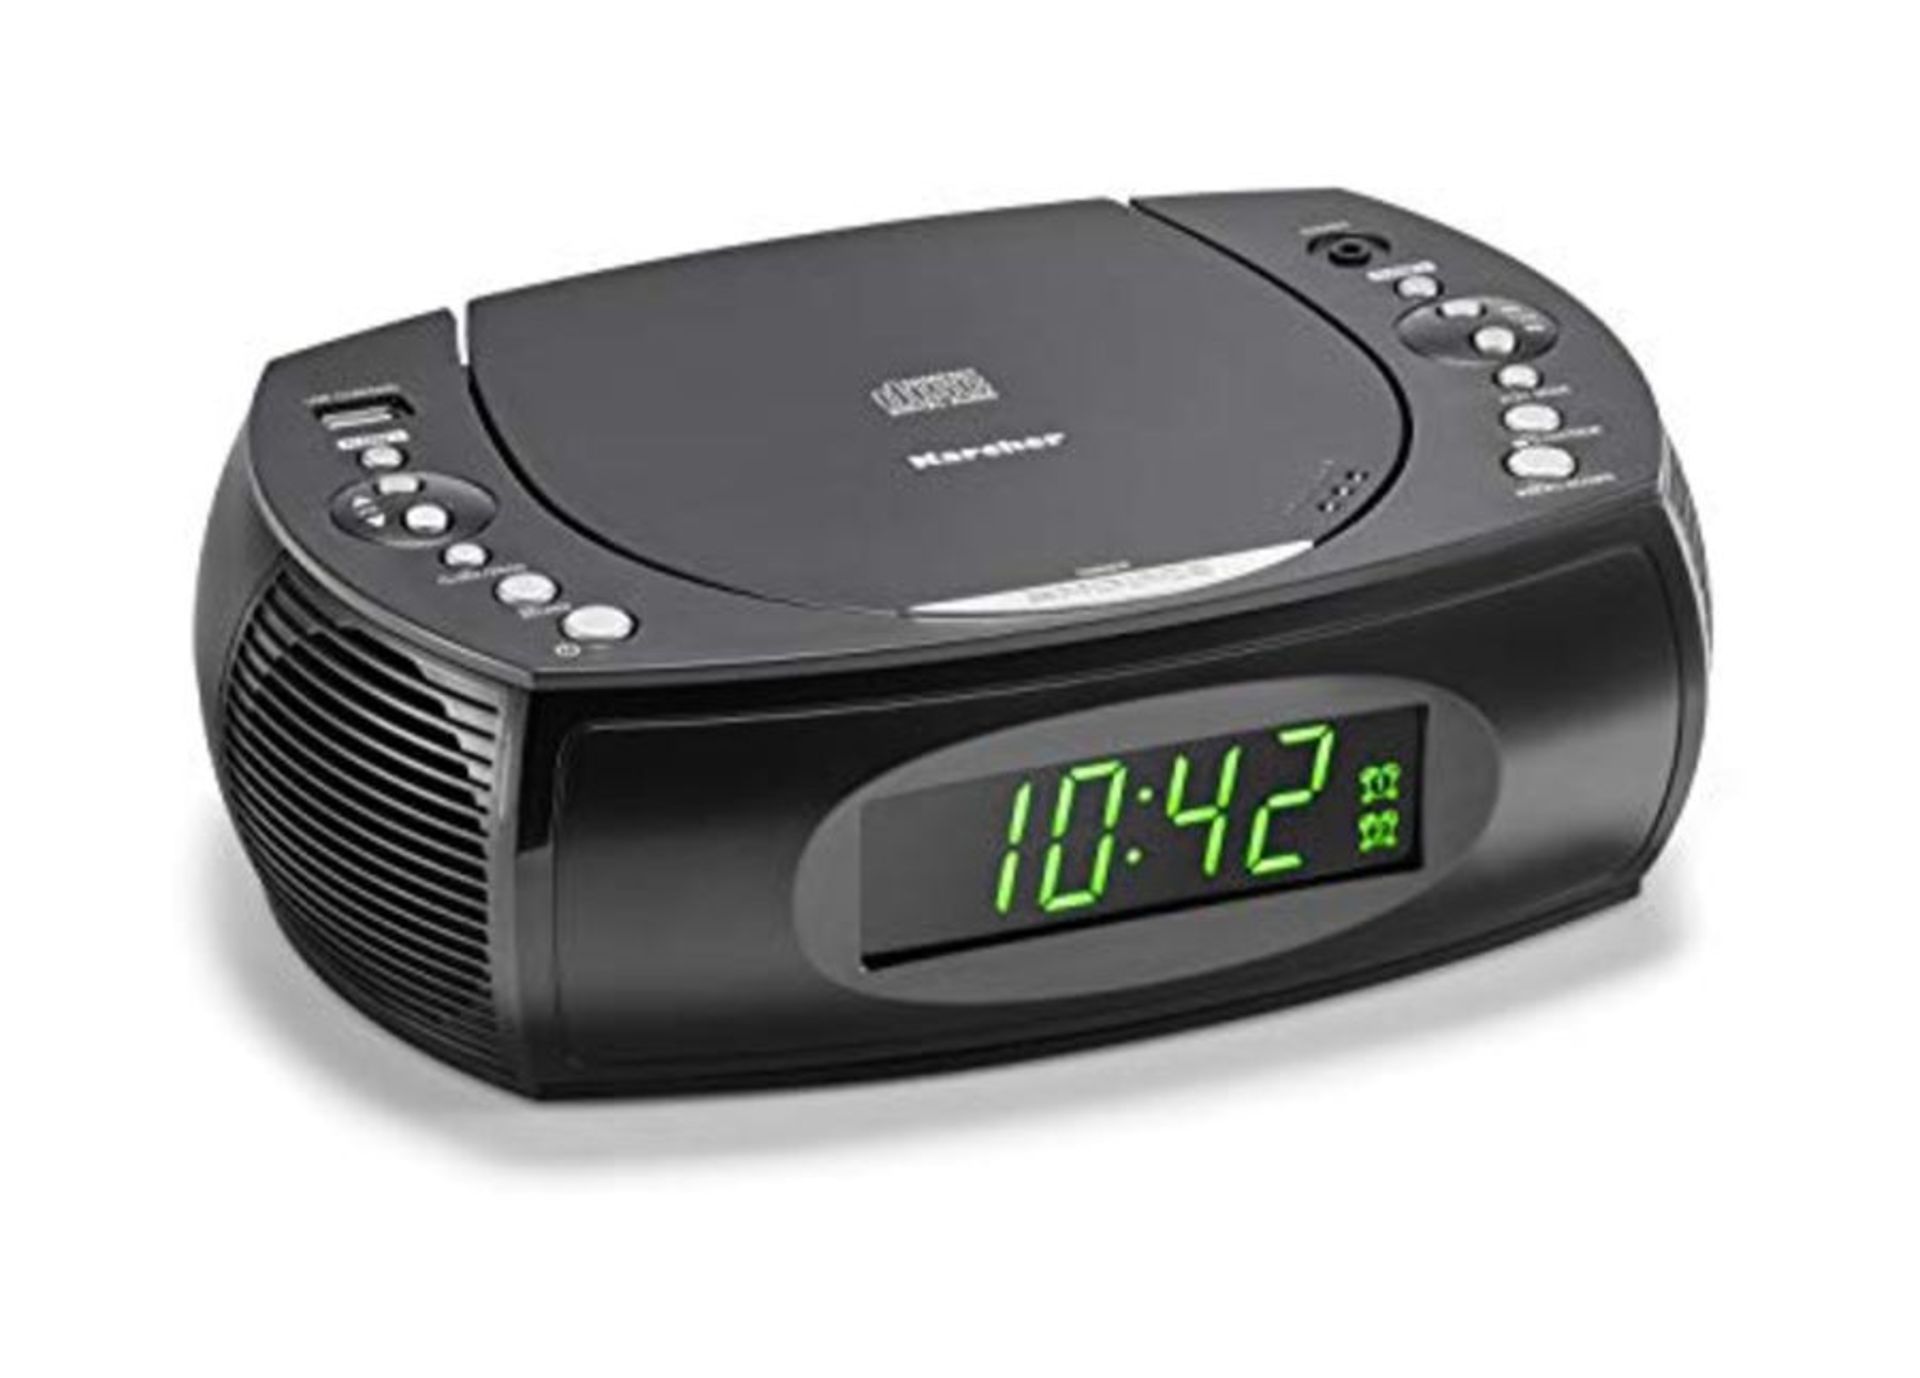 Kärcher (UR 1308) clock radio with CD player and FM radio (20 station memory) USB cha